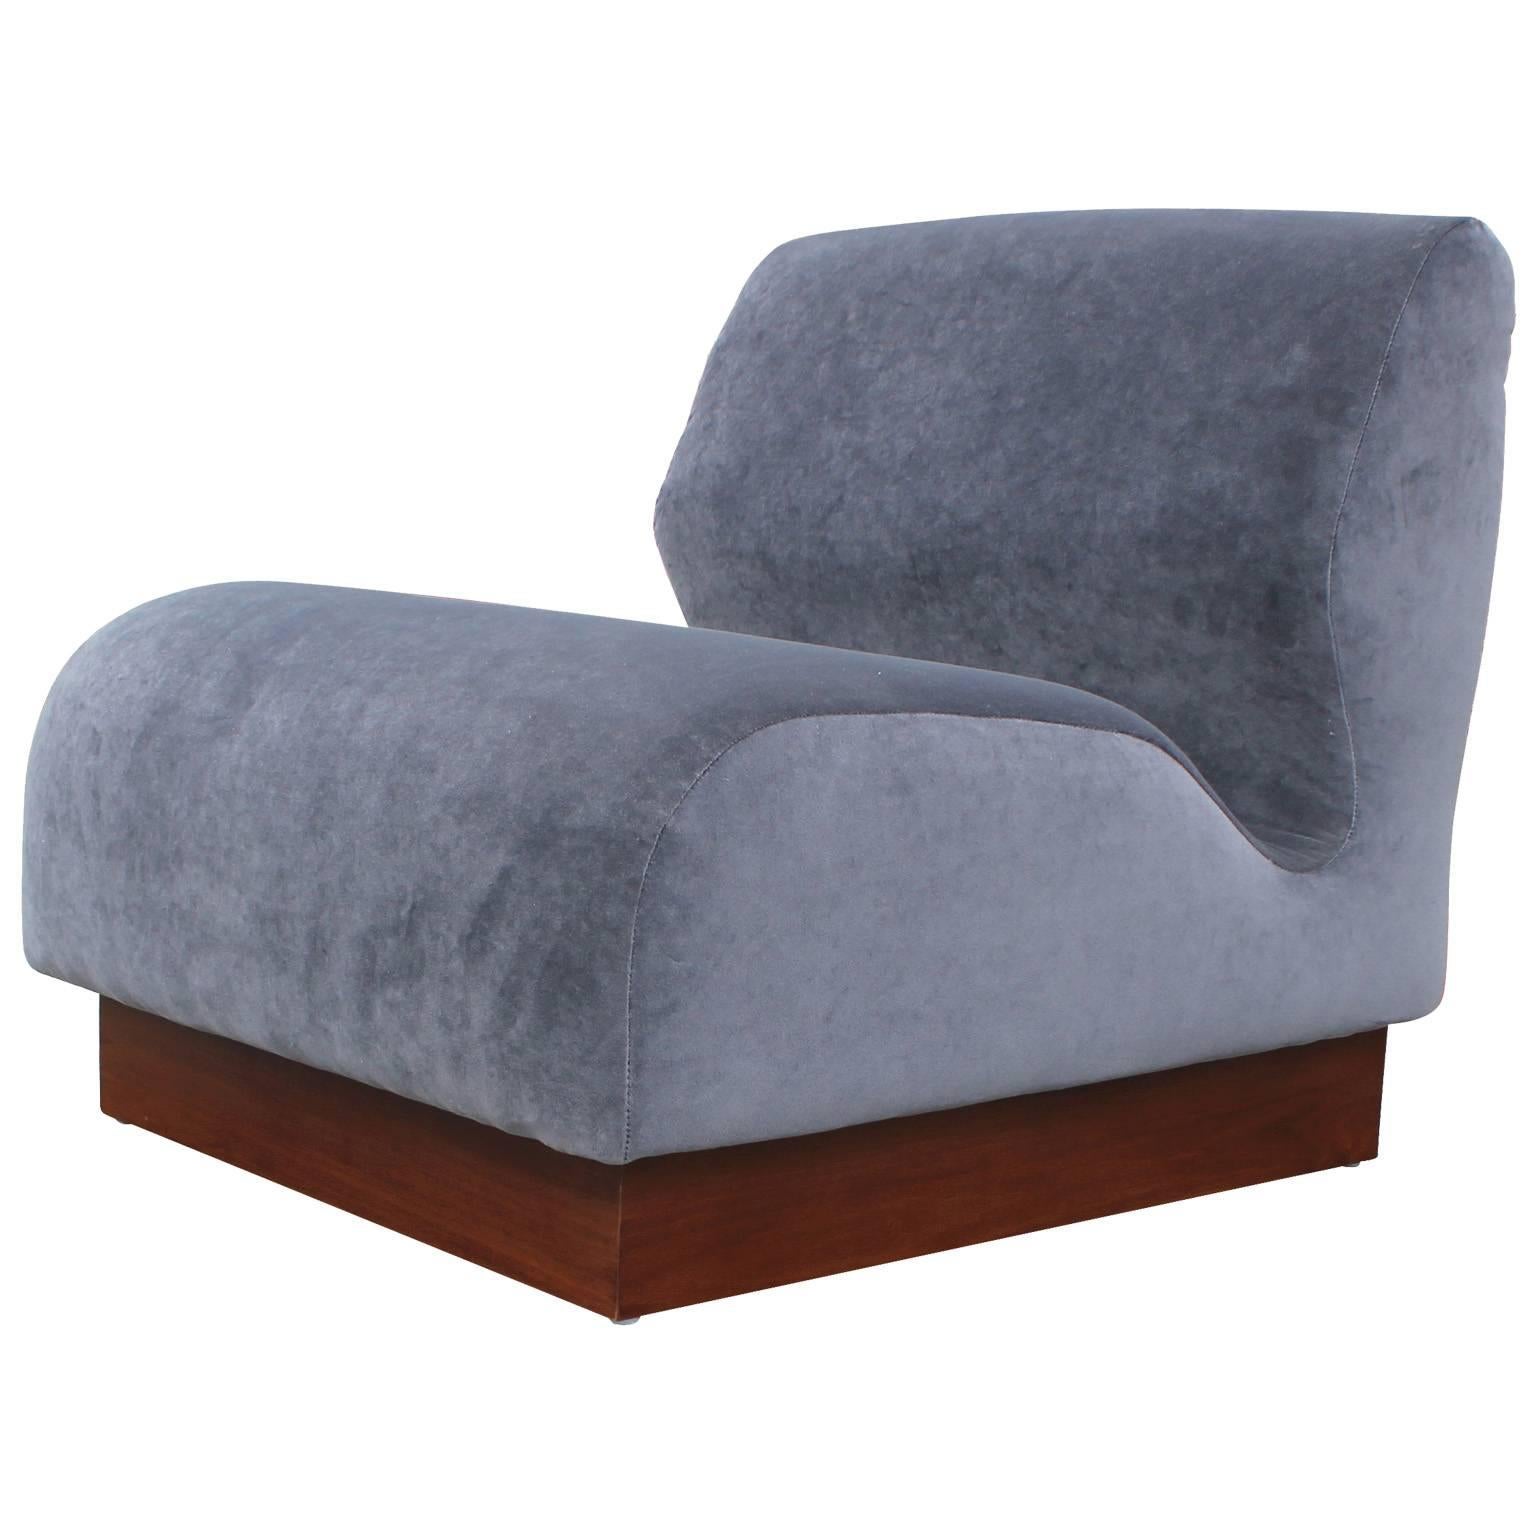 Mid-Century Modern Organic Pair of Slipper Chairs in Grey Velvet